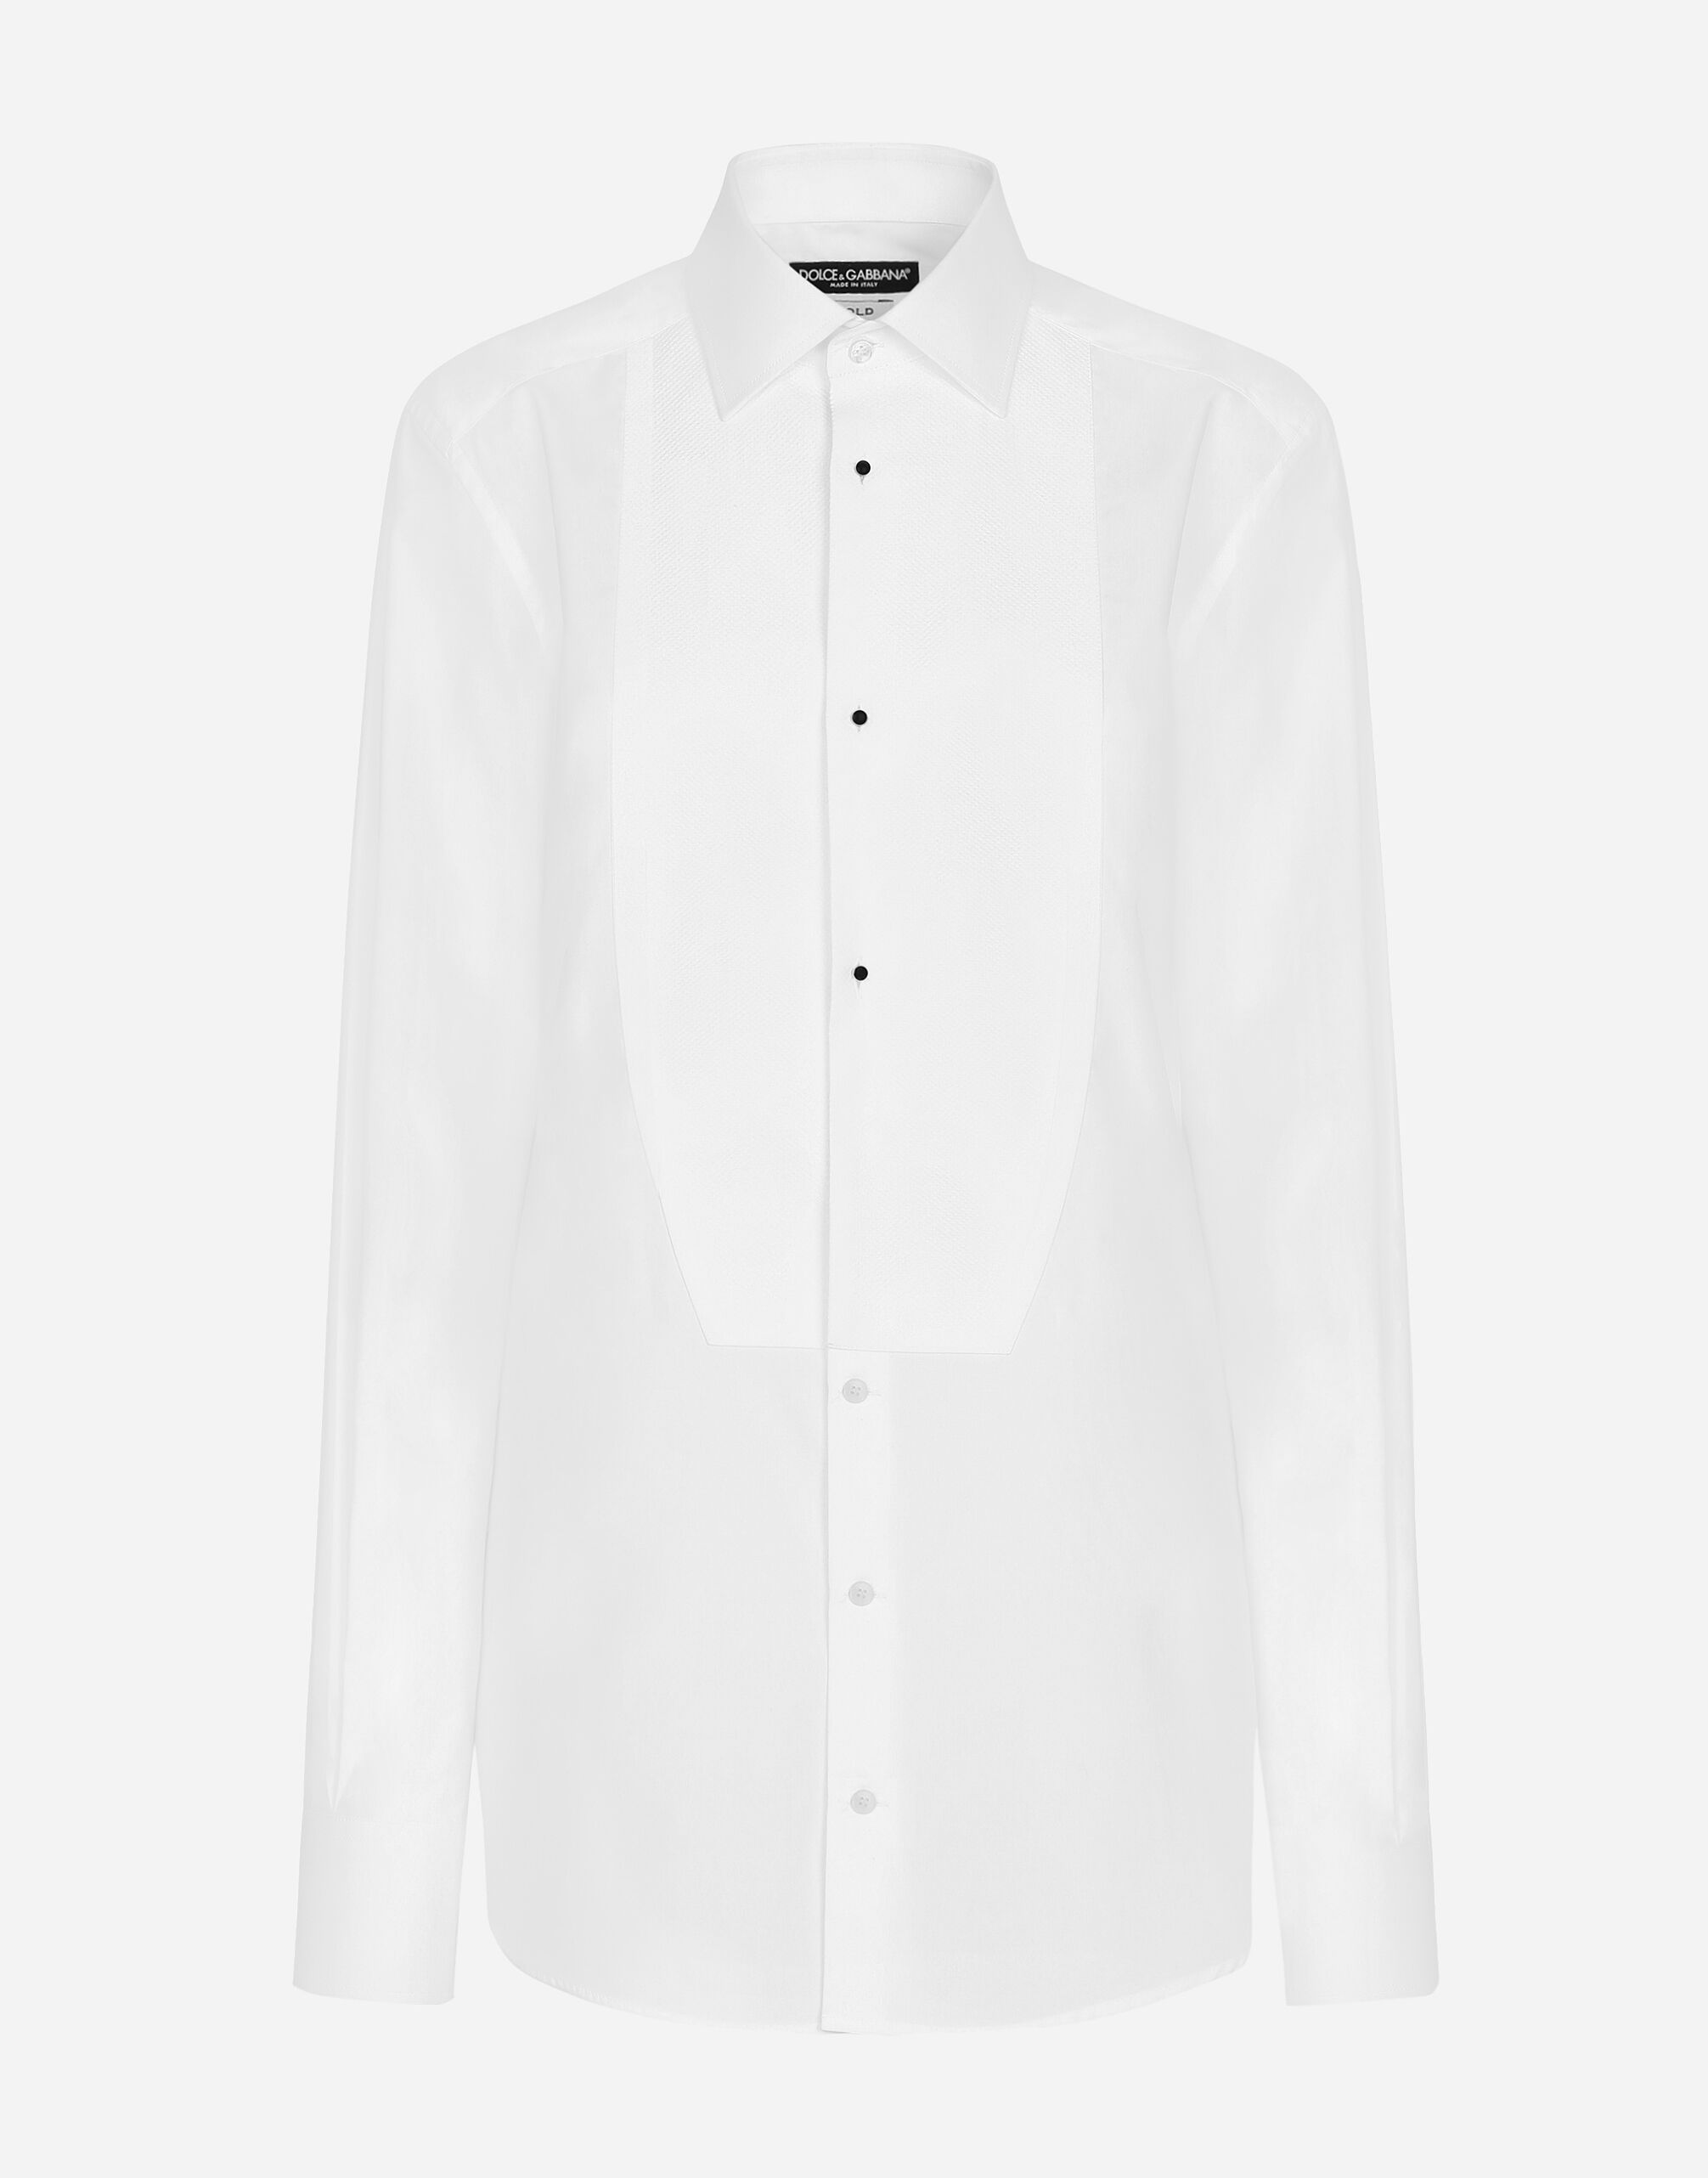 Dolce & Gabbana Cotton tuxedo shirt with piqué shirt front Print F6JGHTHS10S